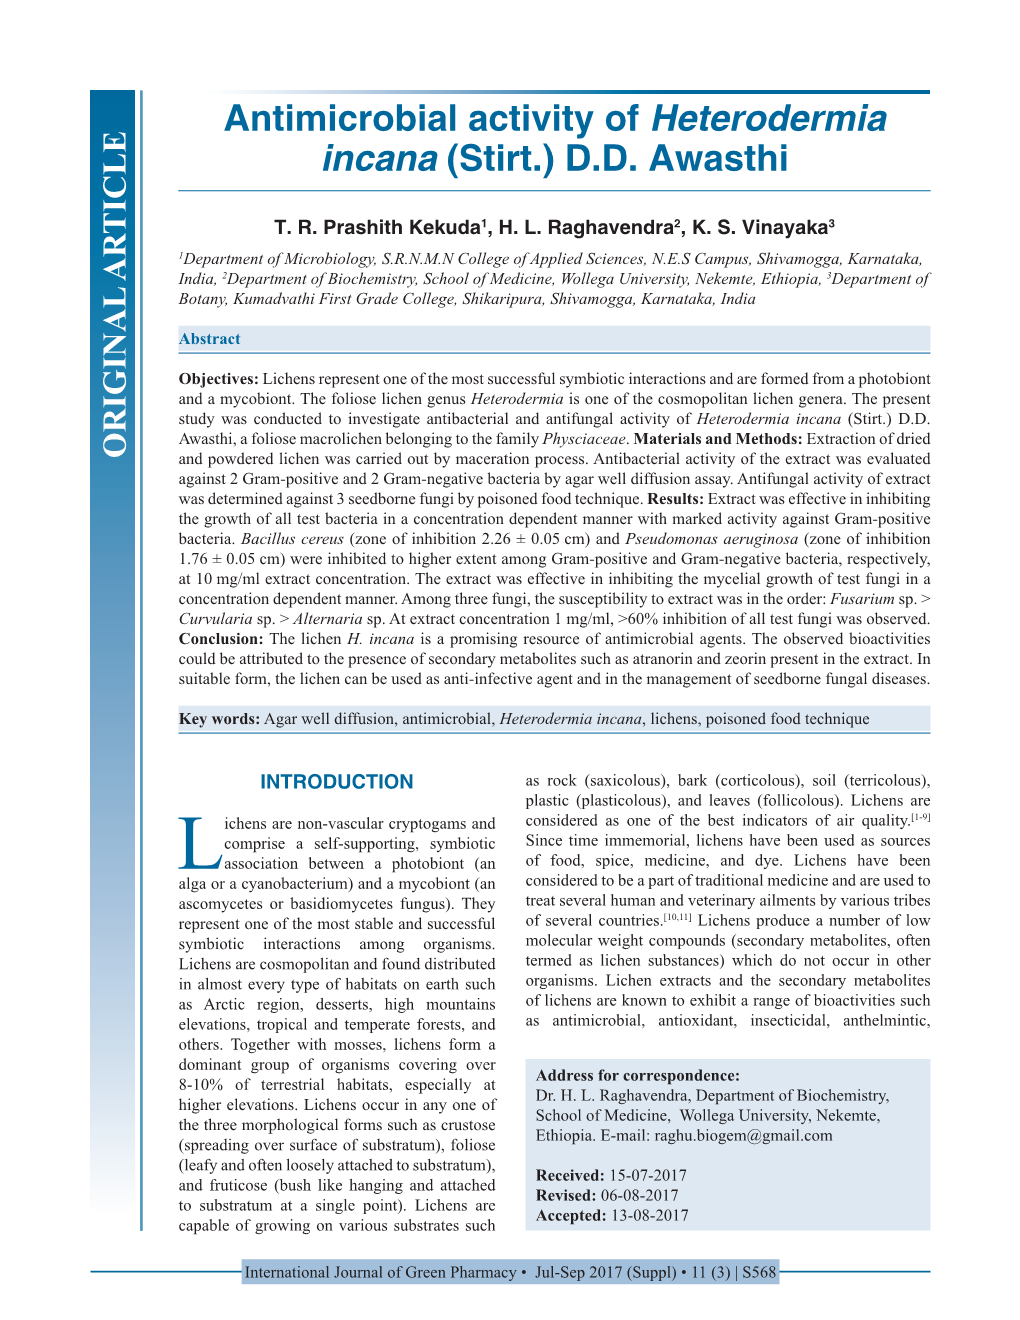 Antimicrobial Activity of Heterodermia Incana (Stirt.) D.D